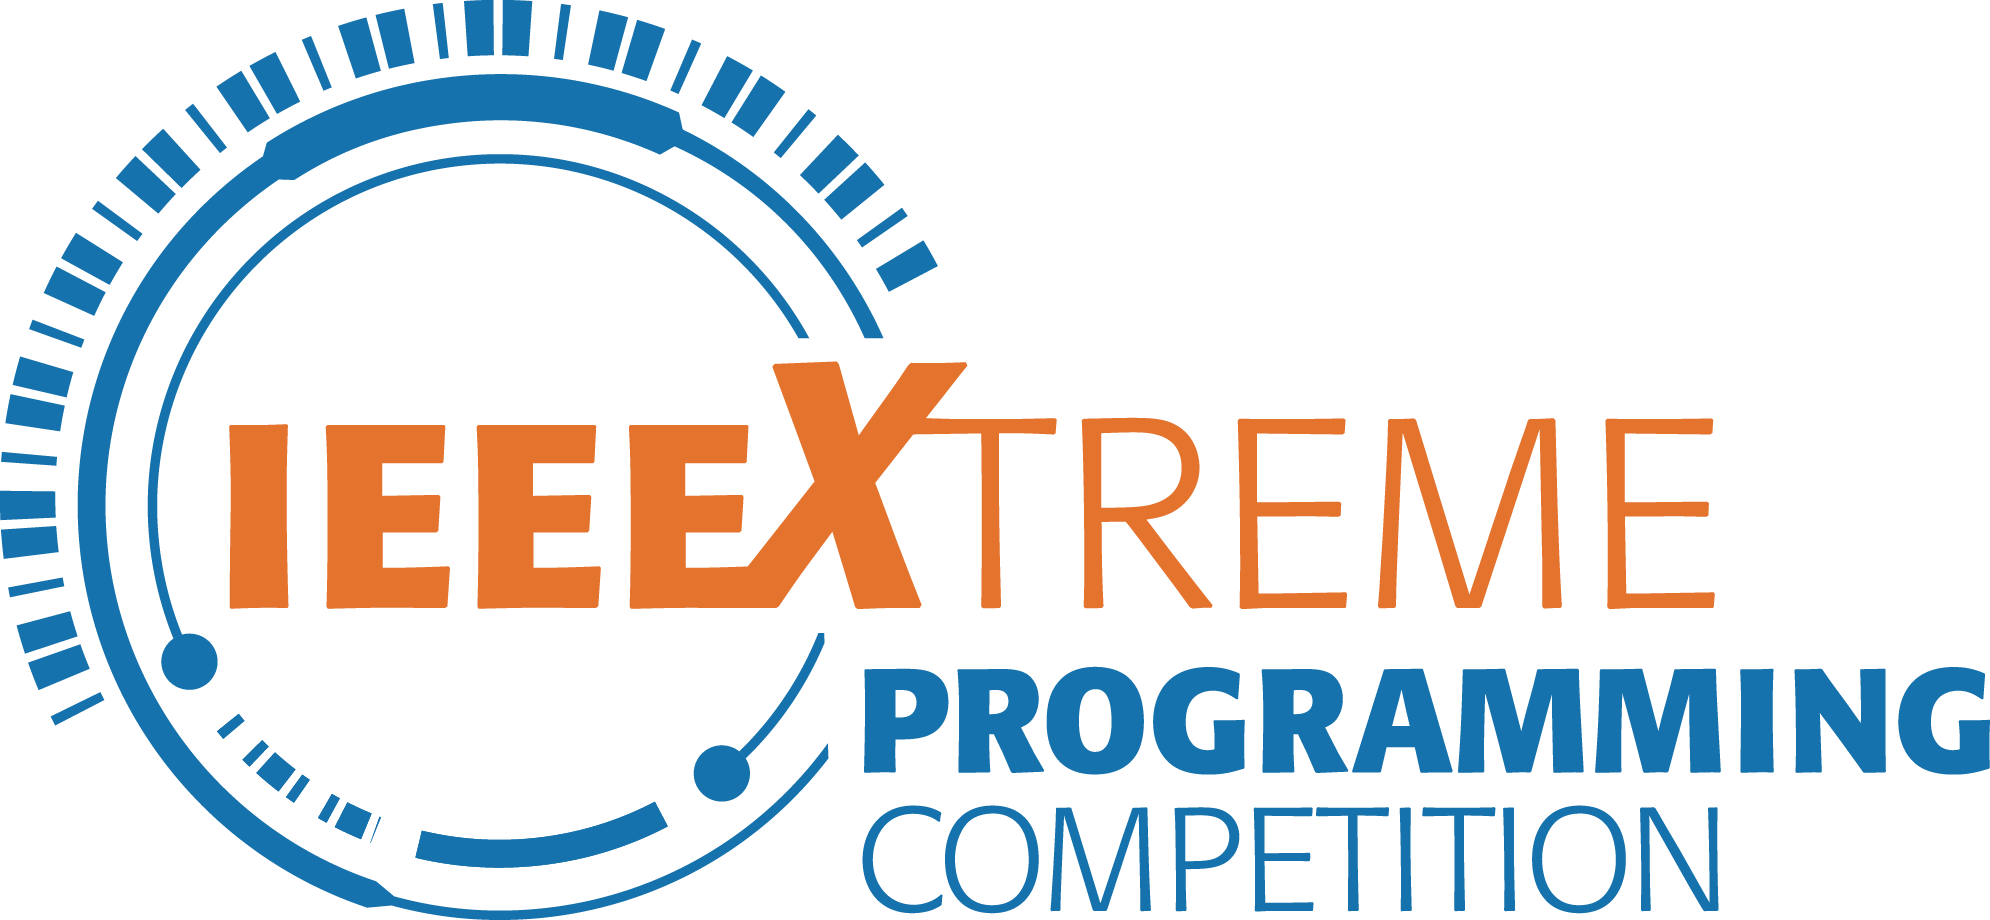 IEEE Extreme logo